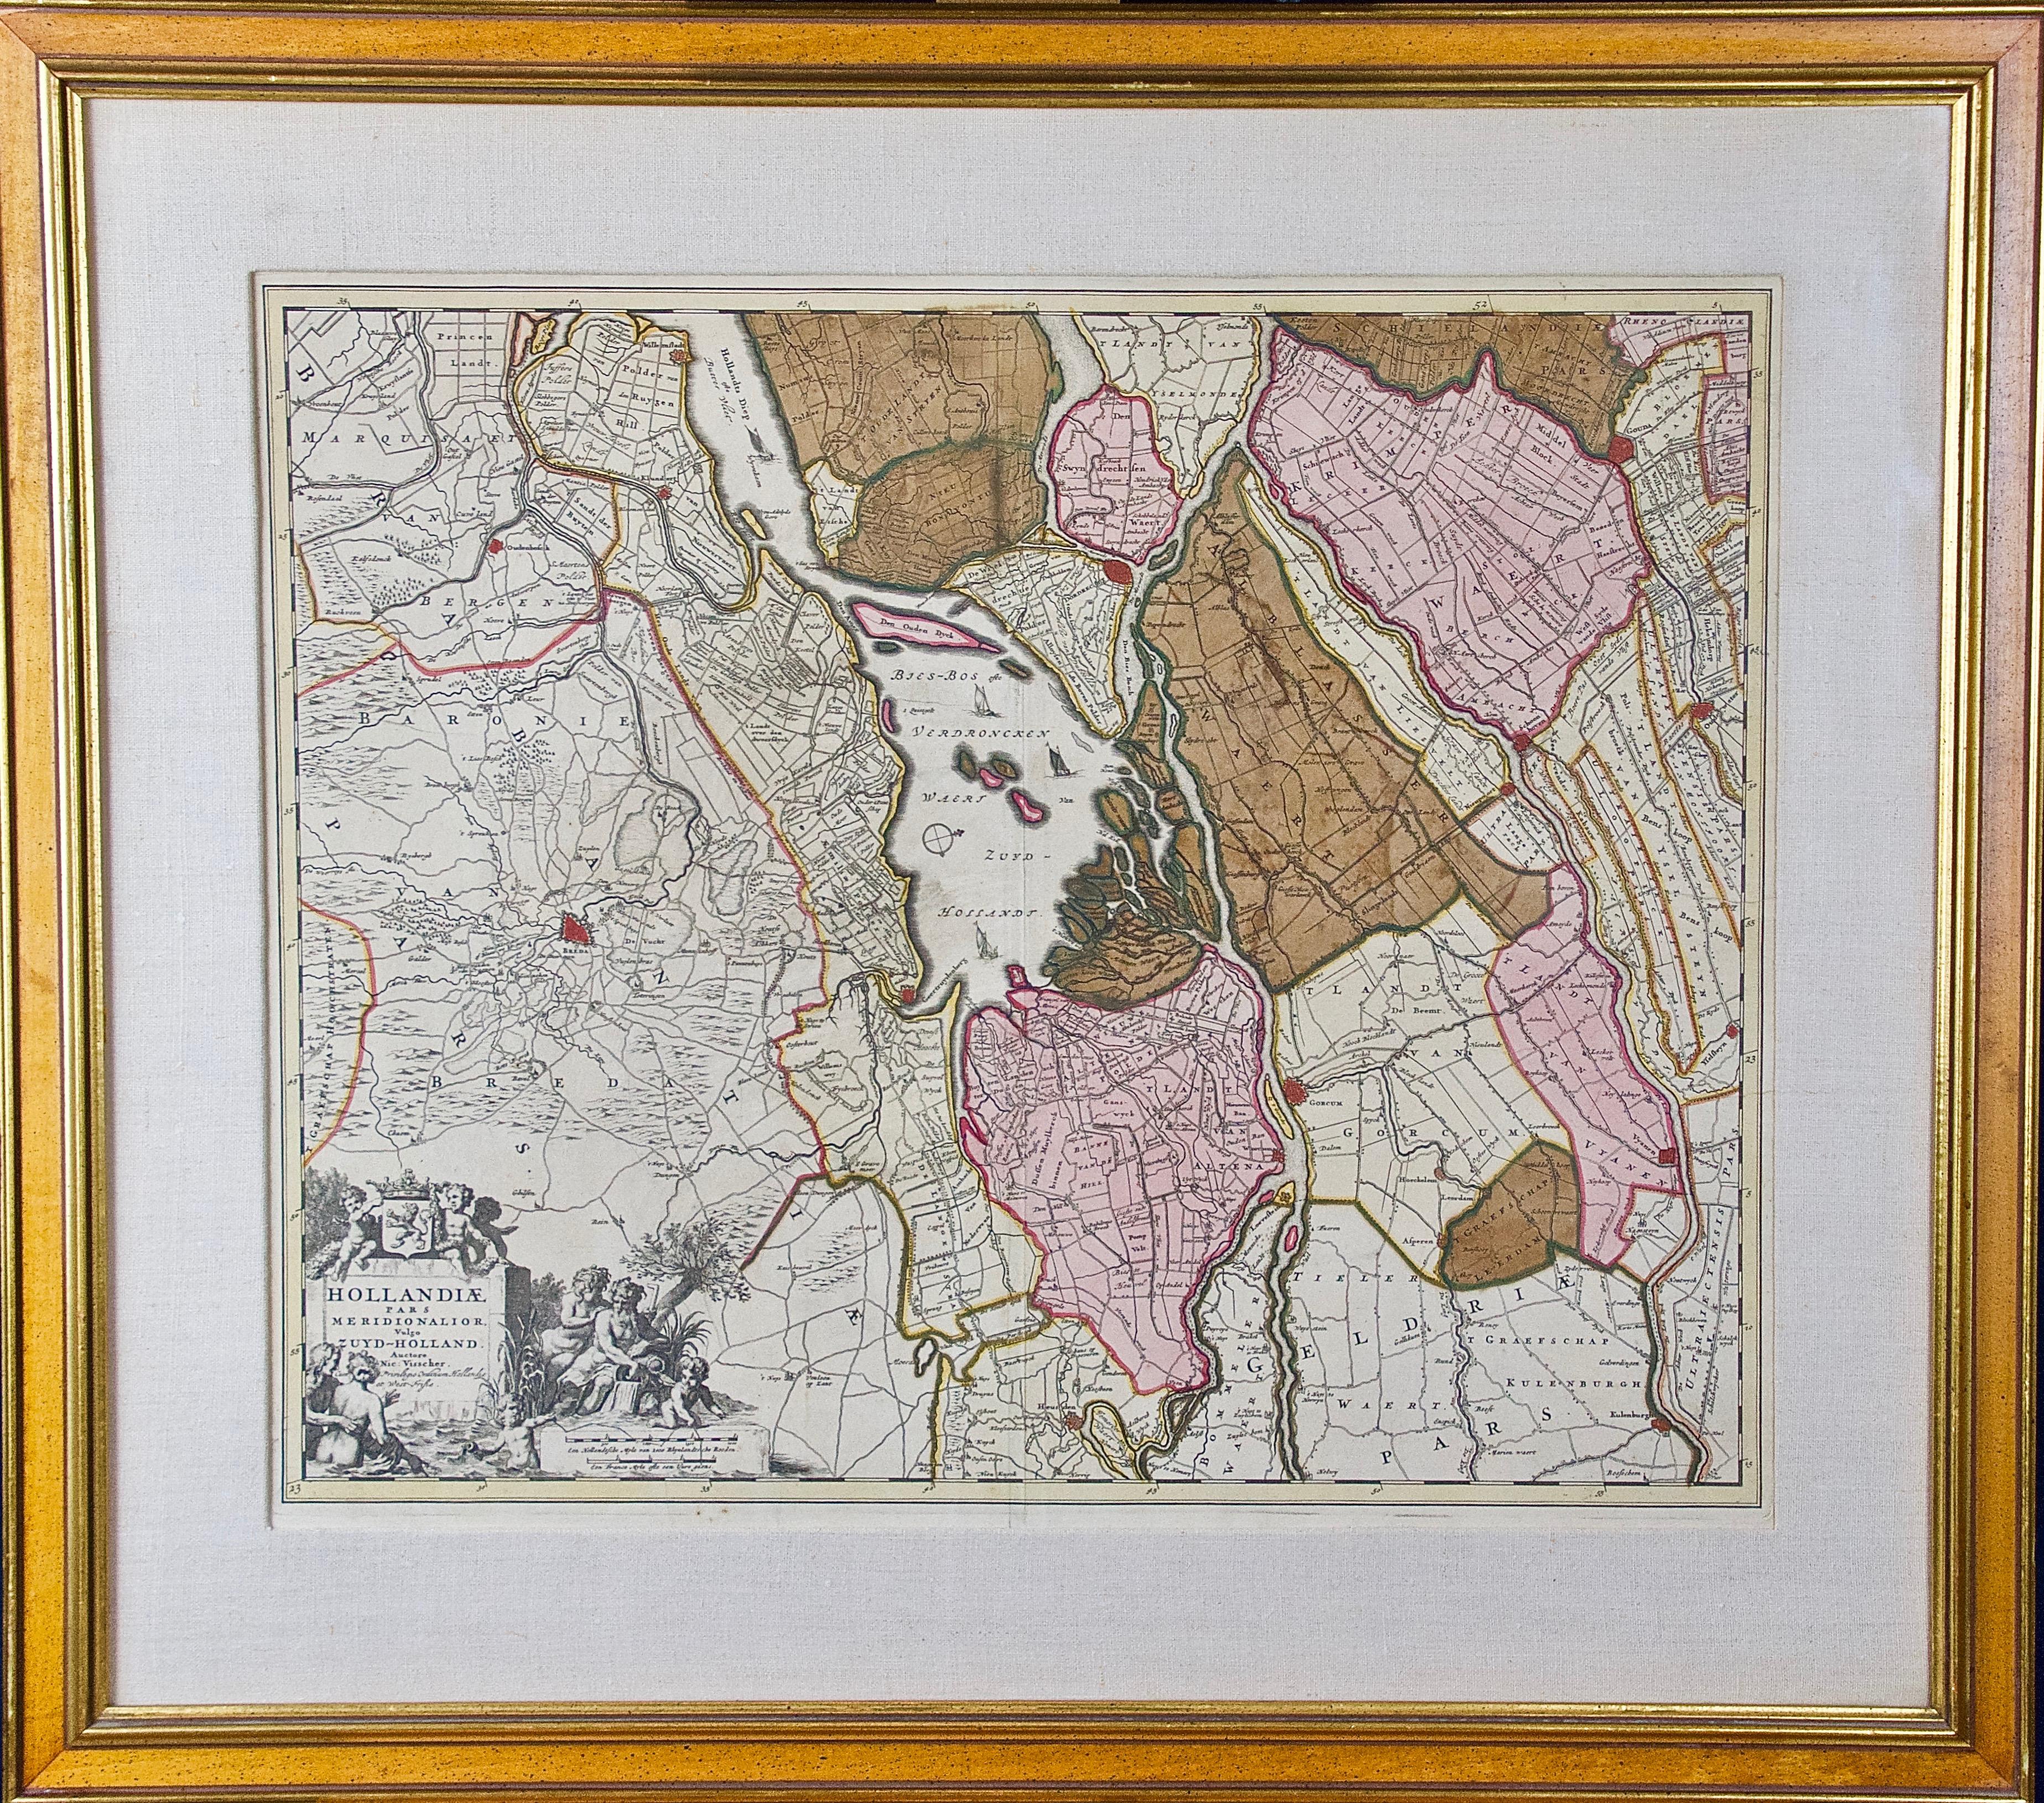 Nicolaus Visscher Landscape Print - Southern Holland: An Original 17th C. Hand-colored Visscher Map "Hollandiae"